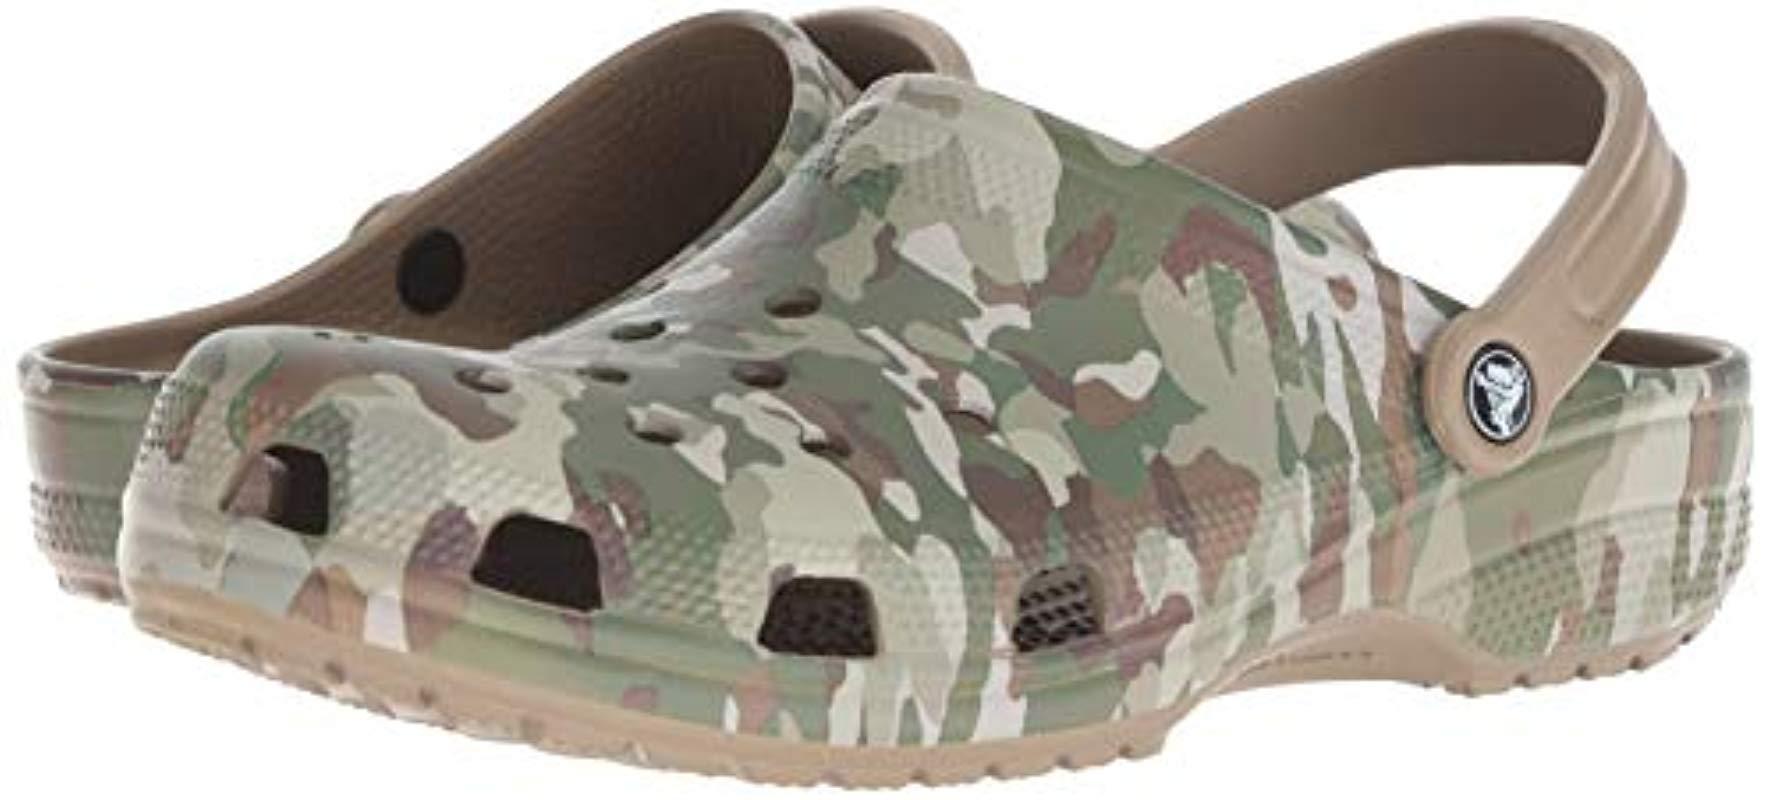 crocs shoes camouflage